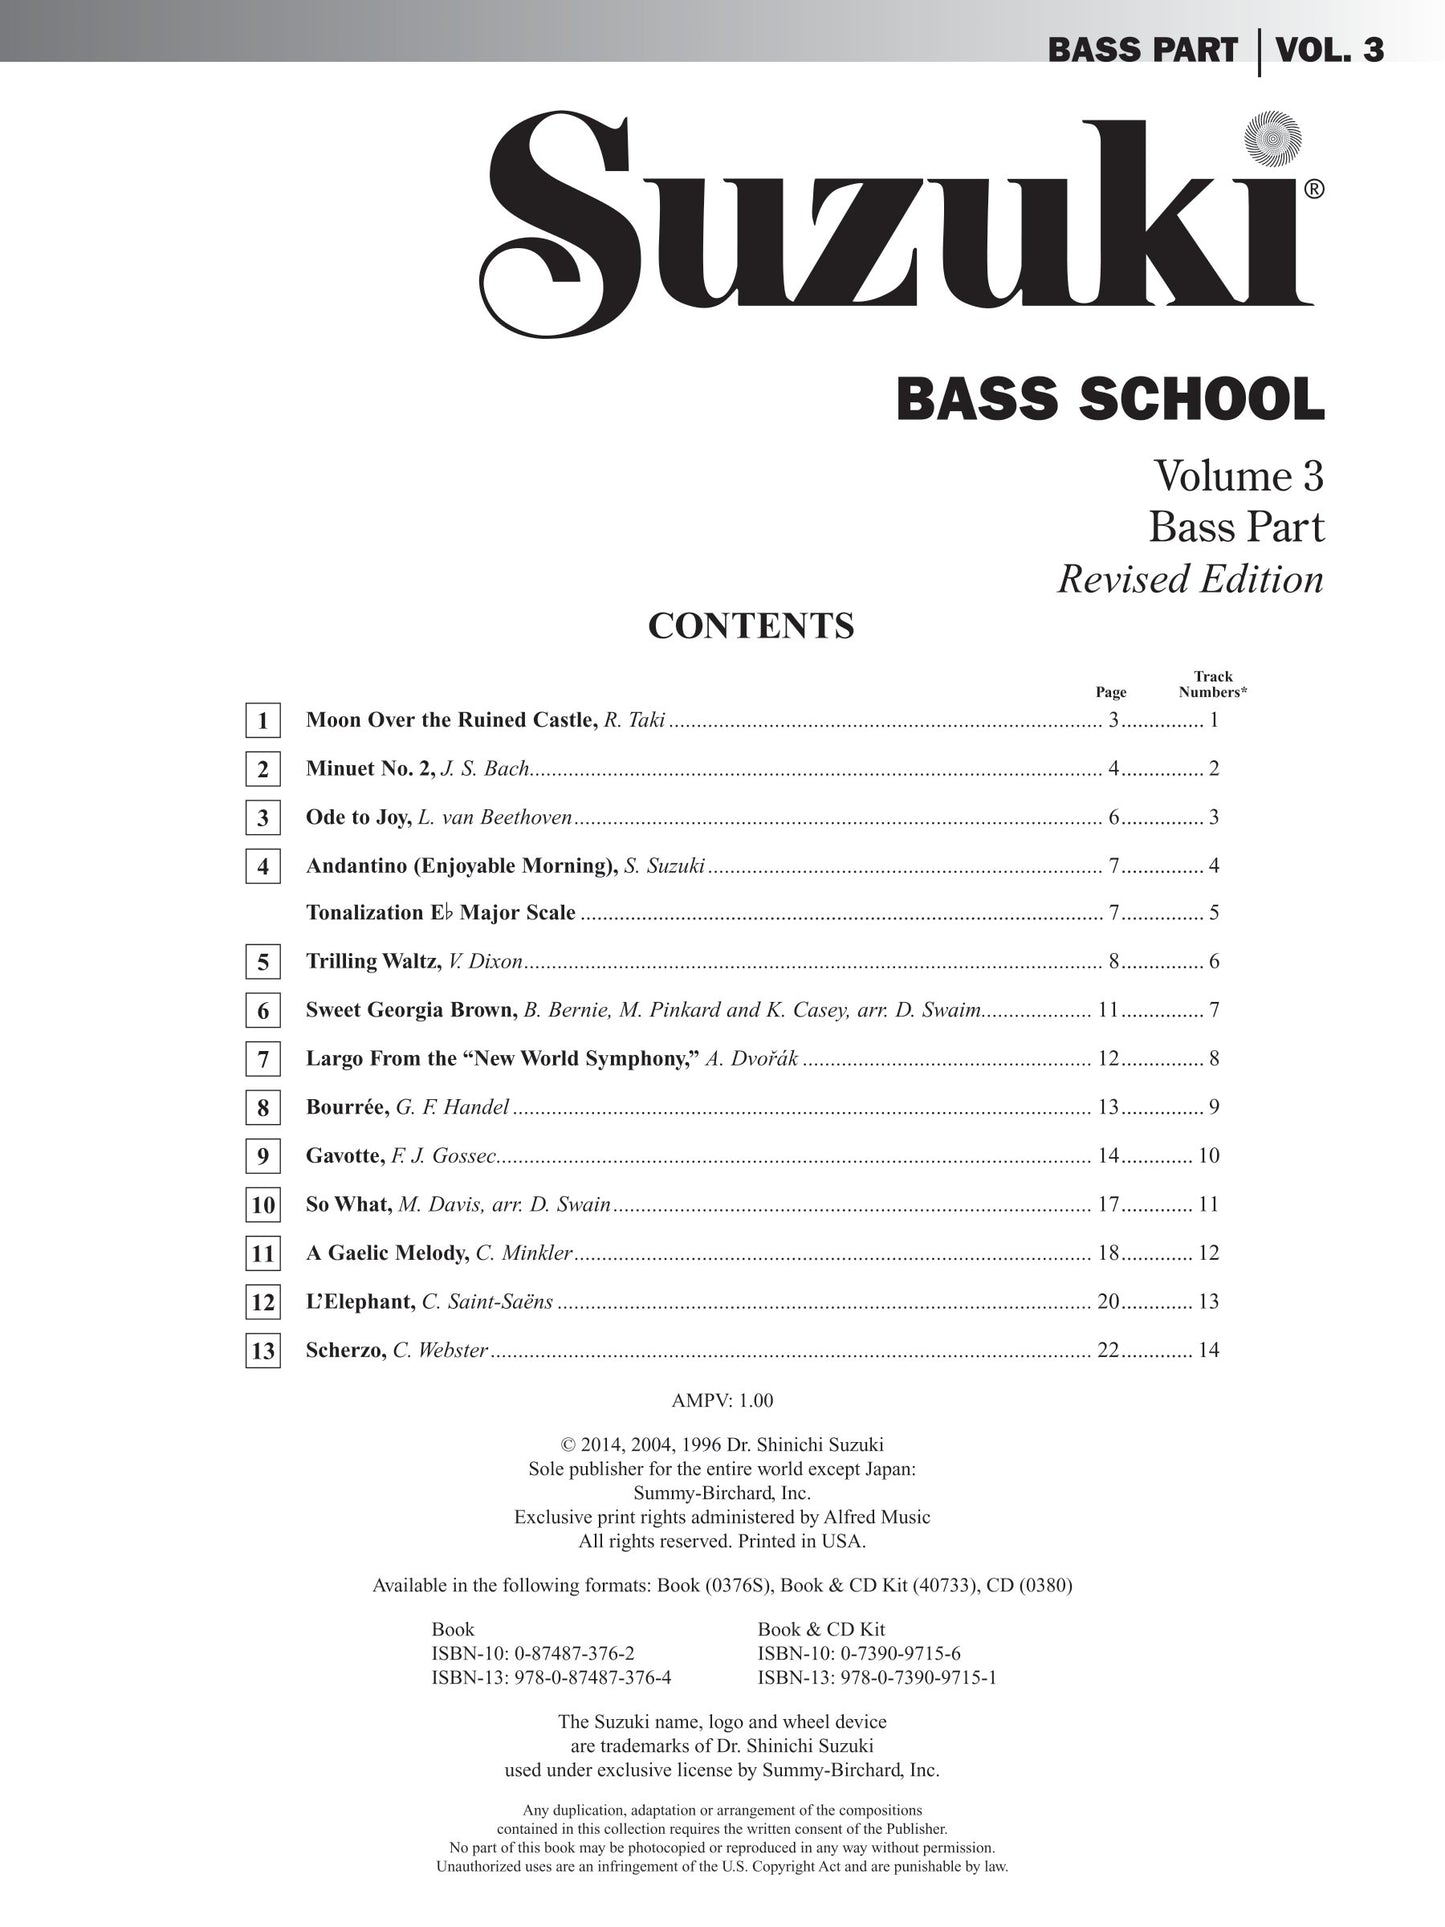 Suzuki Bass School - Volume 3 Double Bass Part Book